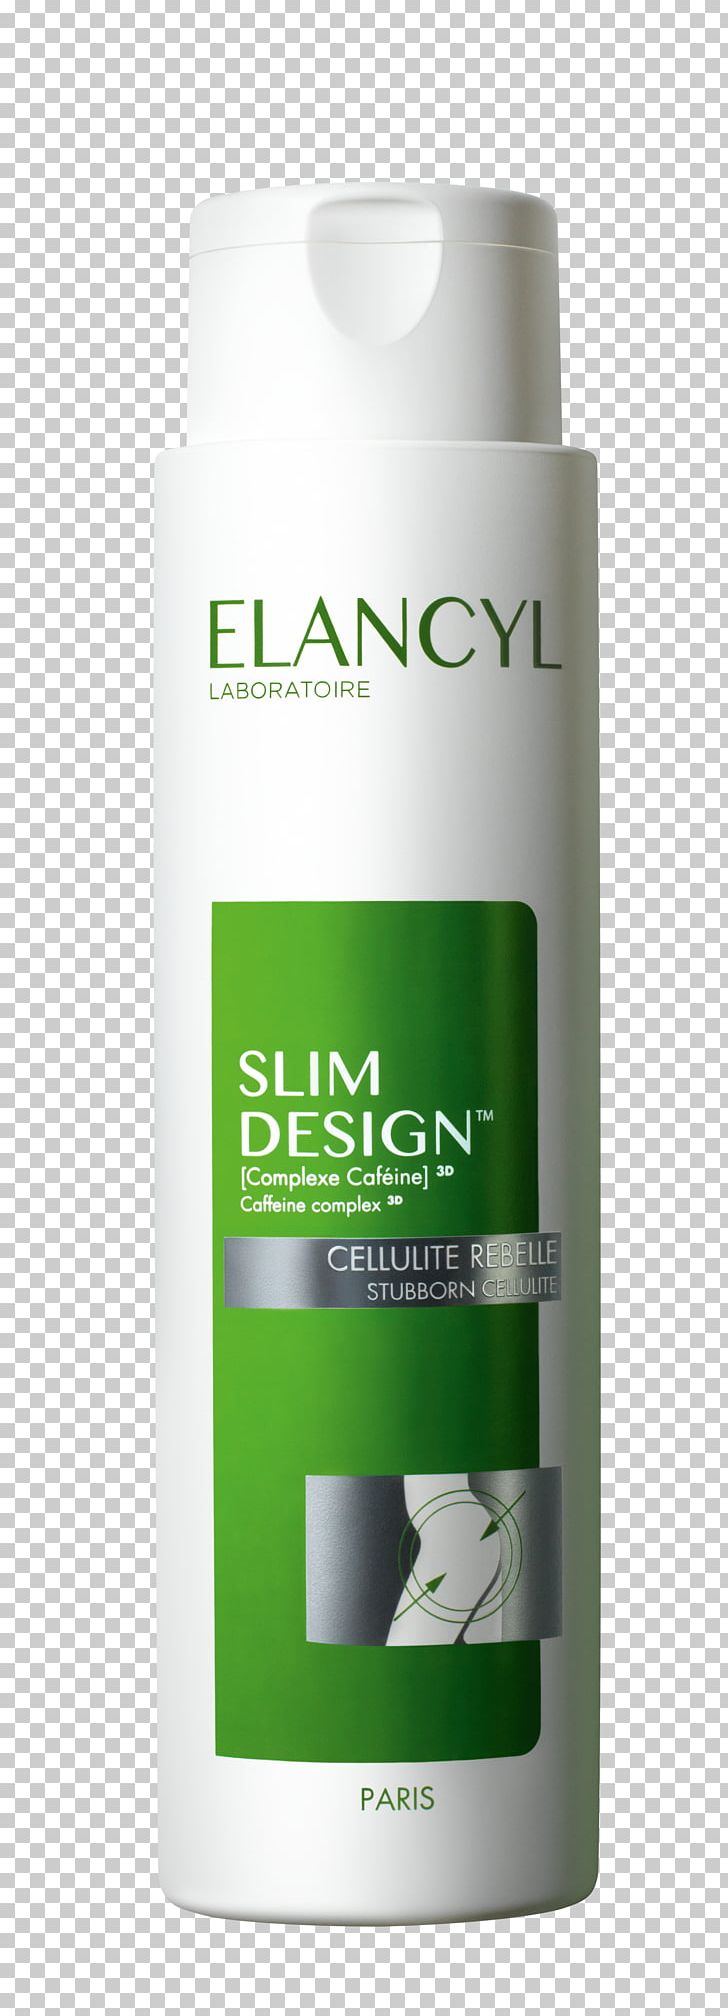 Elancyl Slim Design Soi Anti-cellulite Rebelle Milliliter Architecture Plan PNG, Clipart, Abdomen, Architecture, Cellulite, Cosmetics, Hair Care Free PNG Download